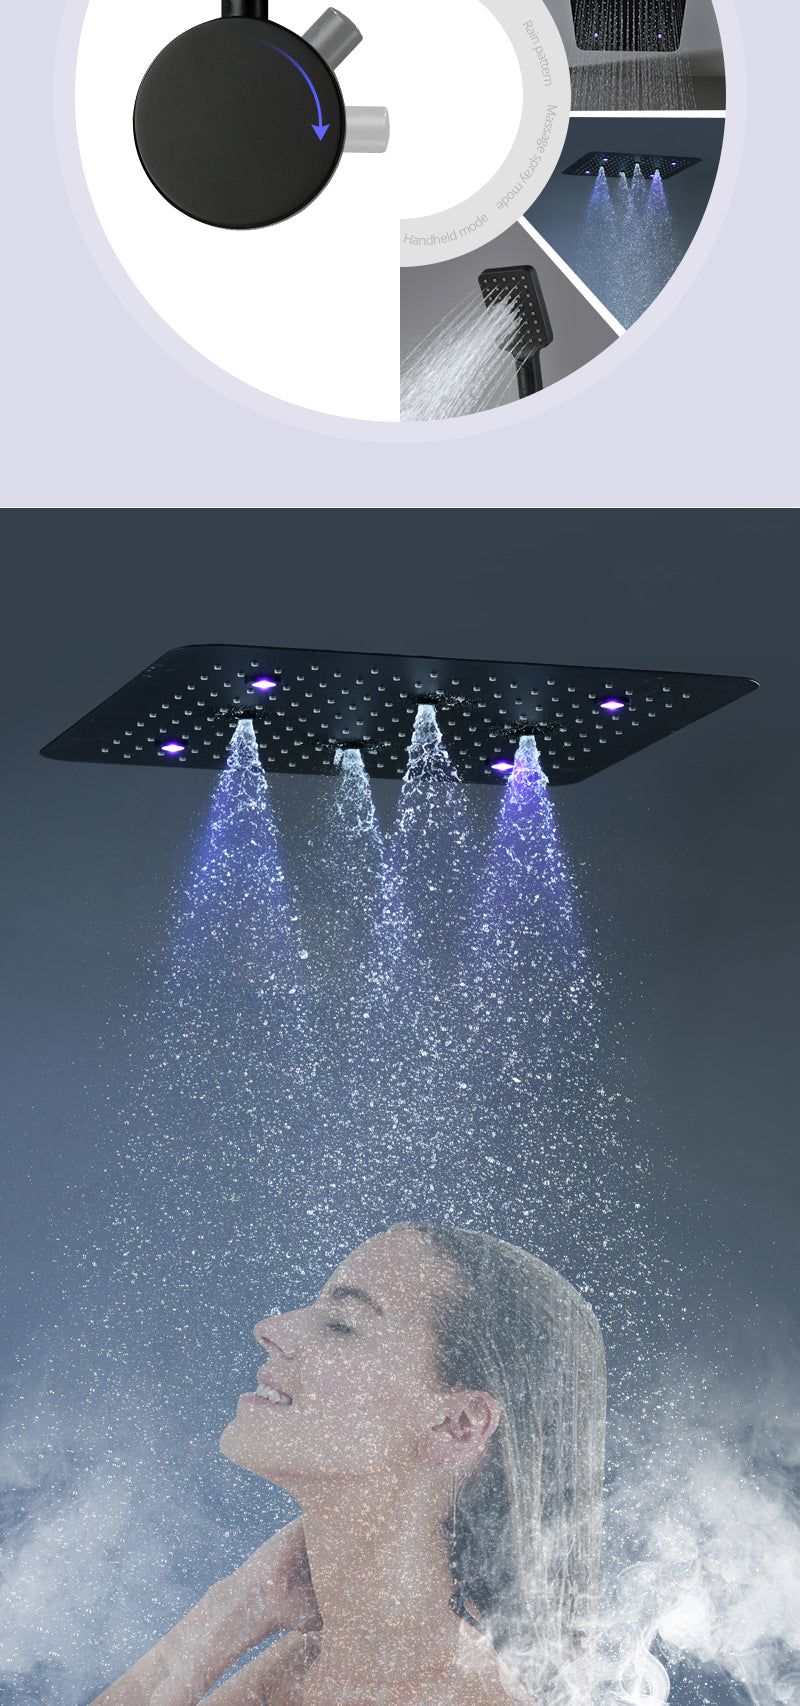 Sistemas de ducha Duschsystem 20 Zoll Quadrat Sistema de ducha con luz LED